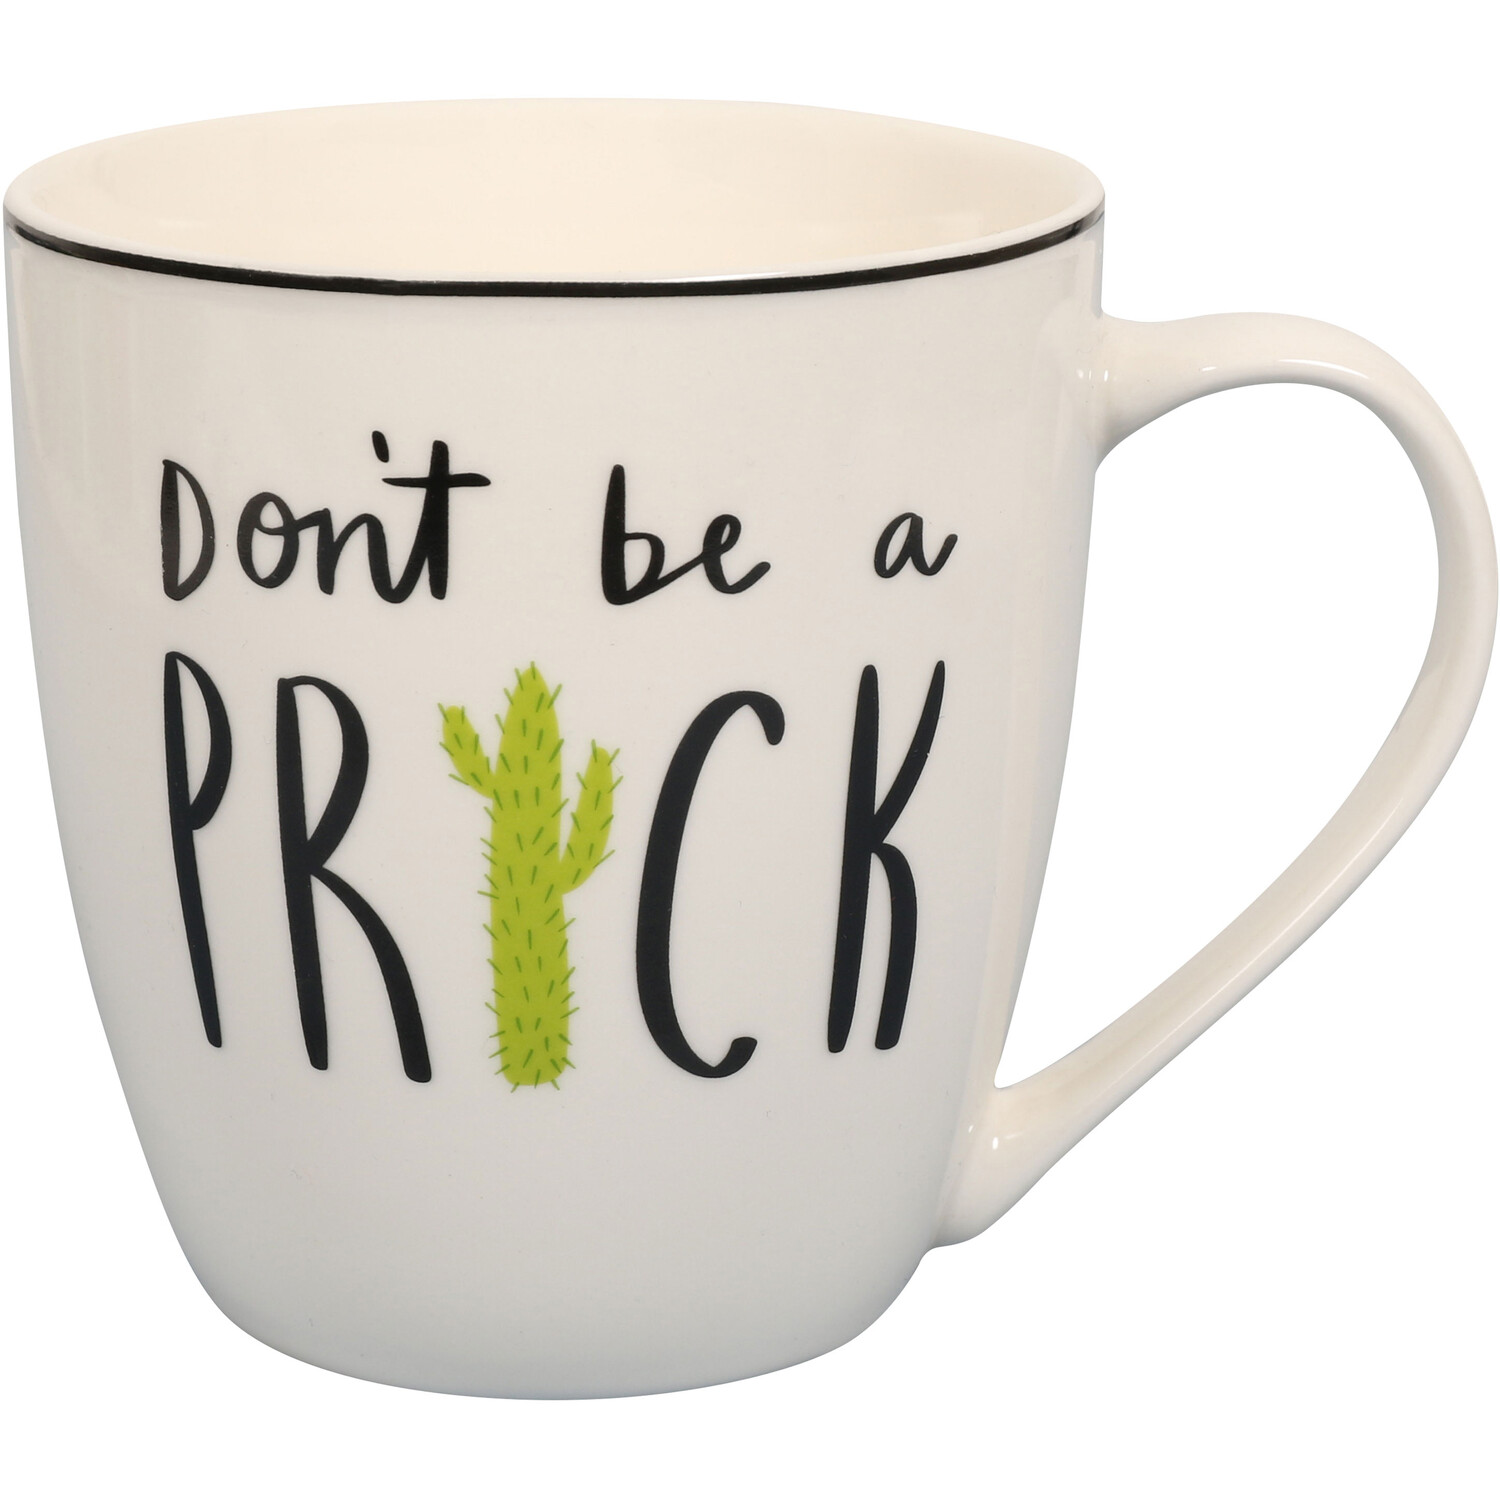 Don't Be a Prick Jumbo Mug - White Image 1